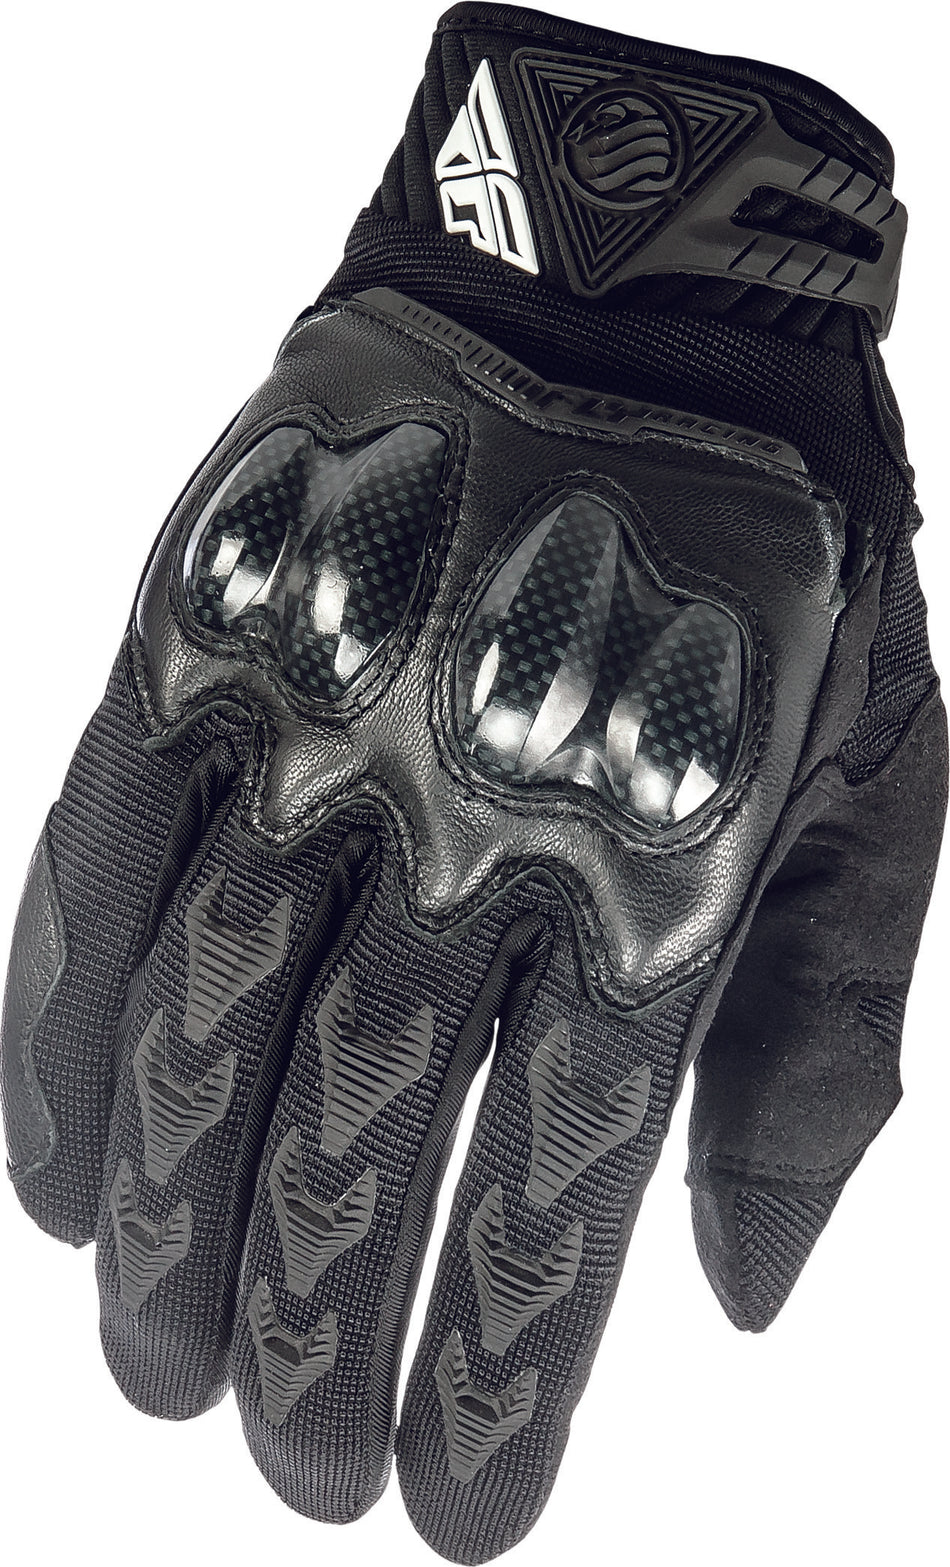 FLY RACING Patrol Xc Gloves Black Sz 11 369-06011